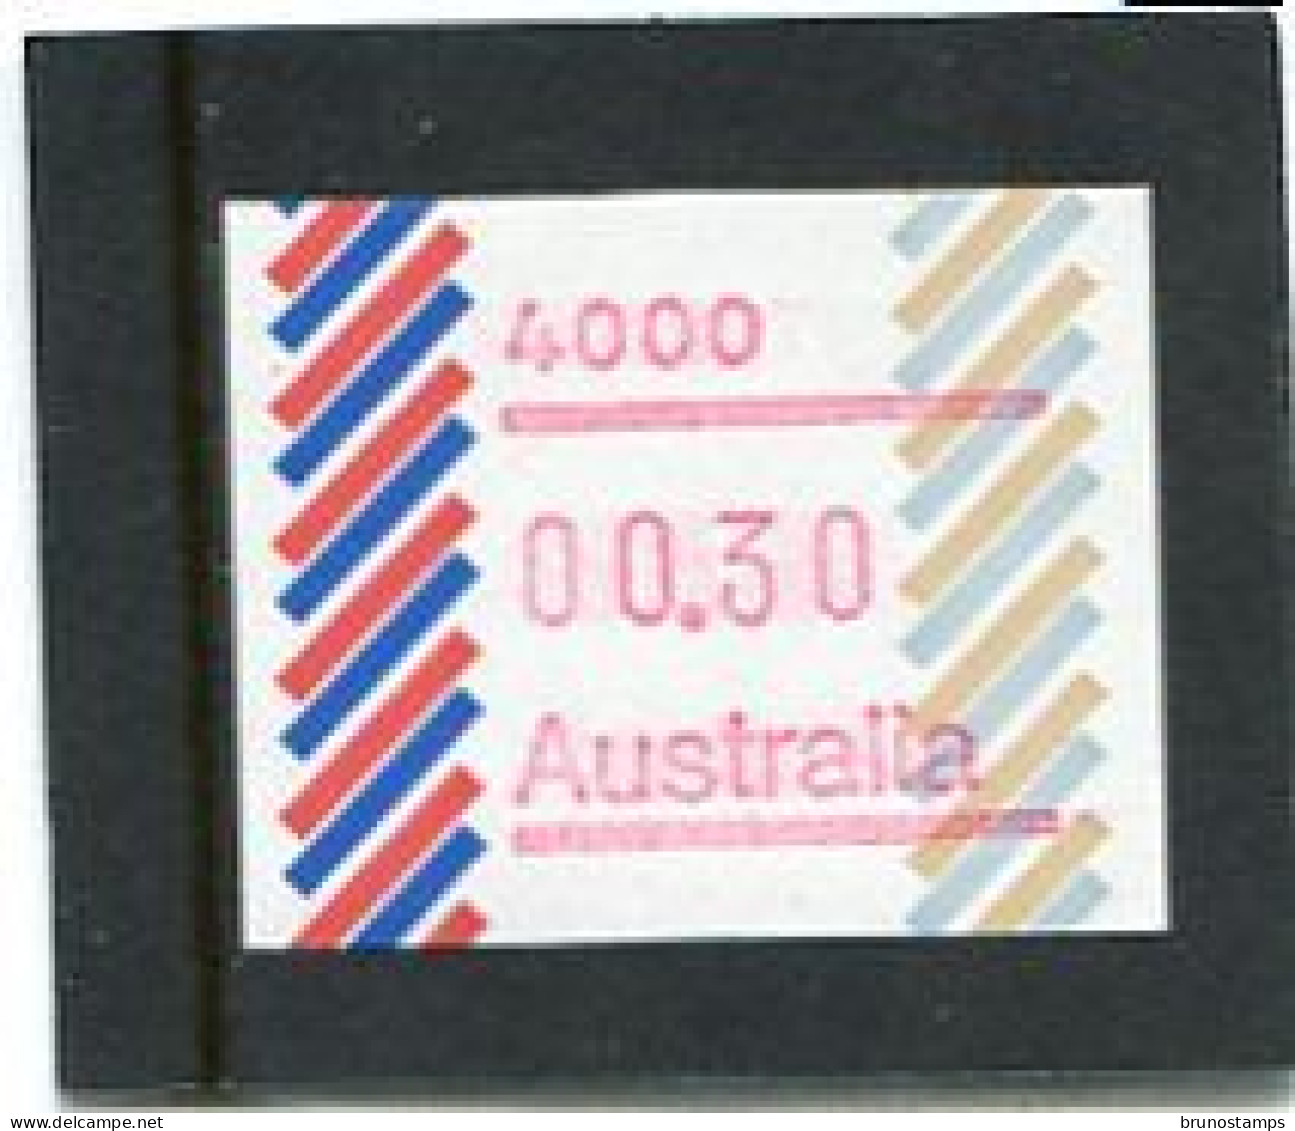 AUSTRALIA - 1984  30c  FRAMA  BARRED EDGE  POSTCODE  4000 (BRISBANE)  MINT NH - Vignette [ATM]